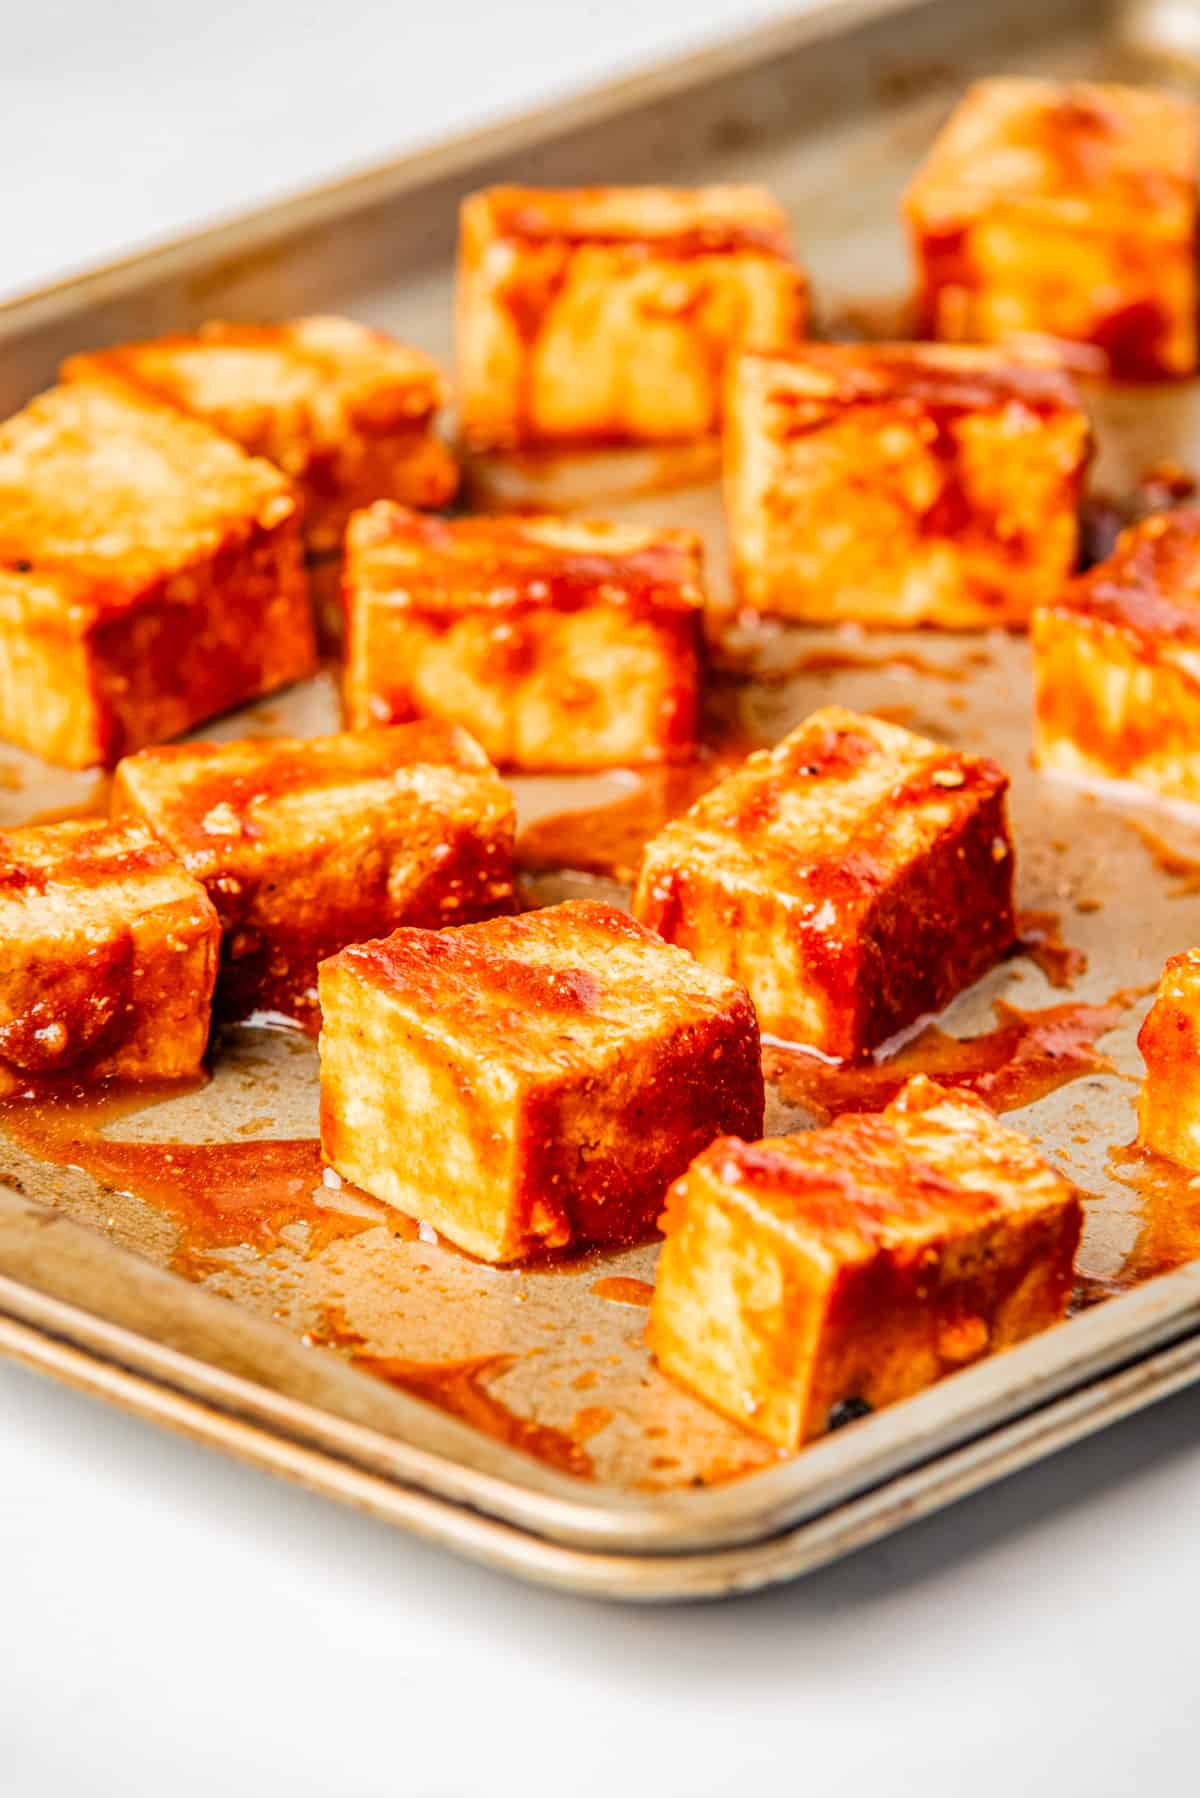 A close up image of gochujang sauce-coated tofu in a baking pan.